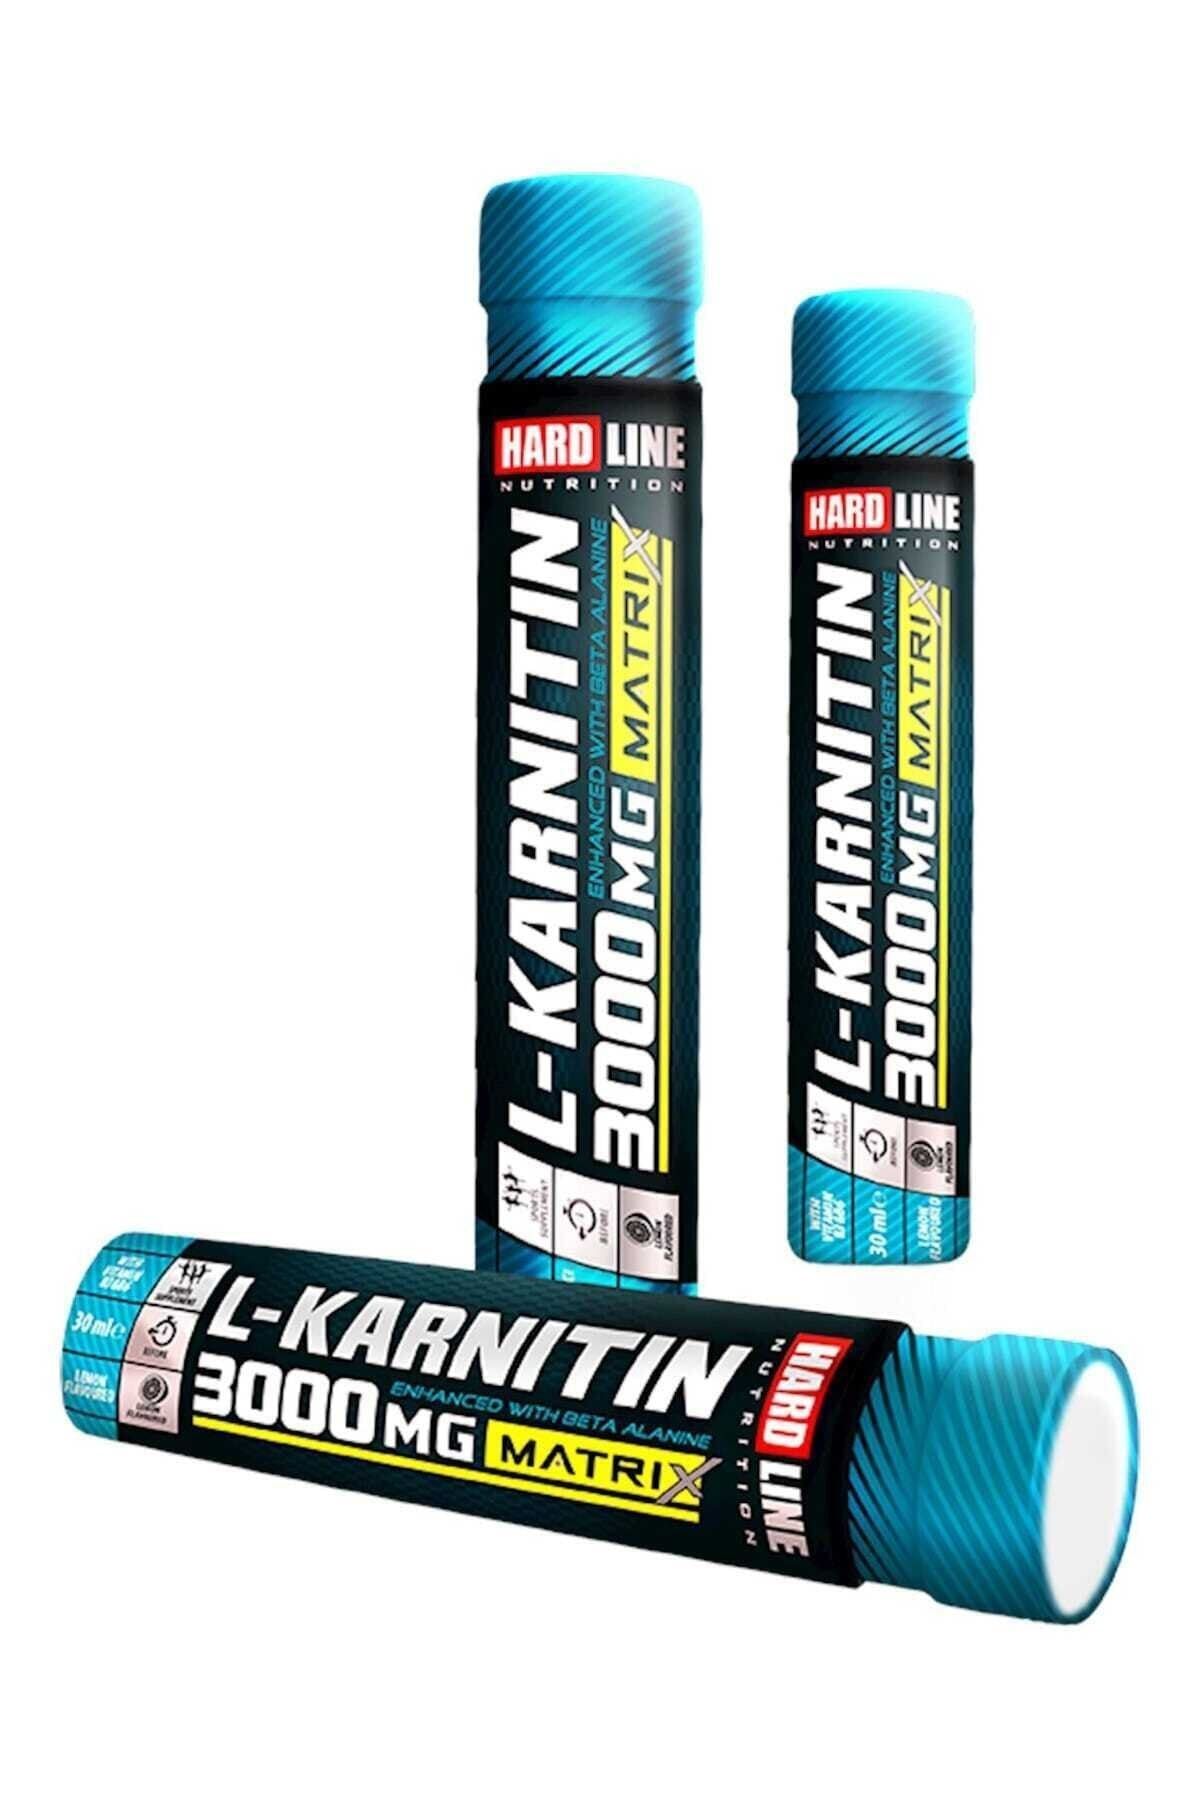 Hardline L-karnitin Matrix 3000 Mg 1 Adet Limon Aromalı